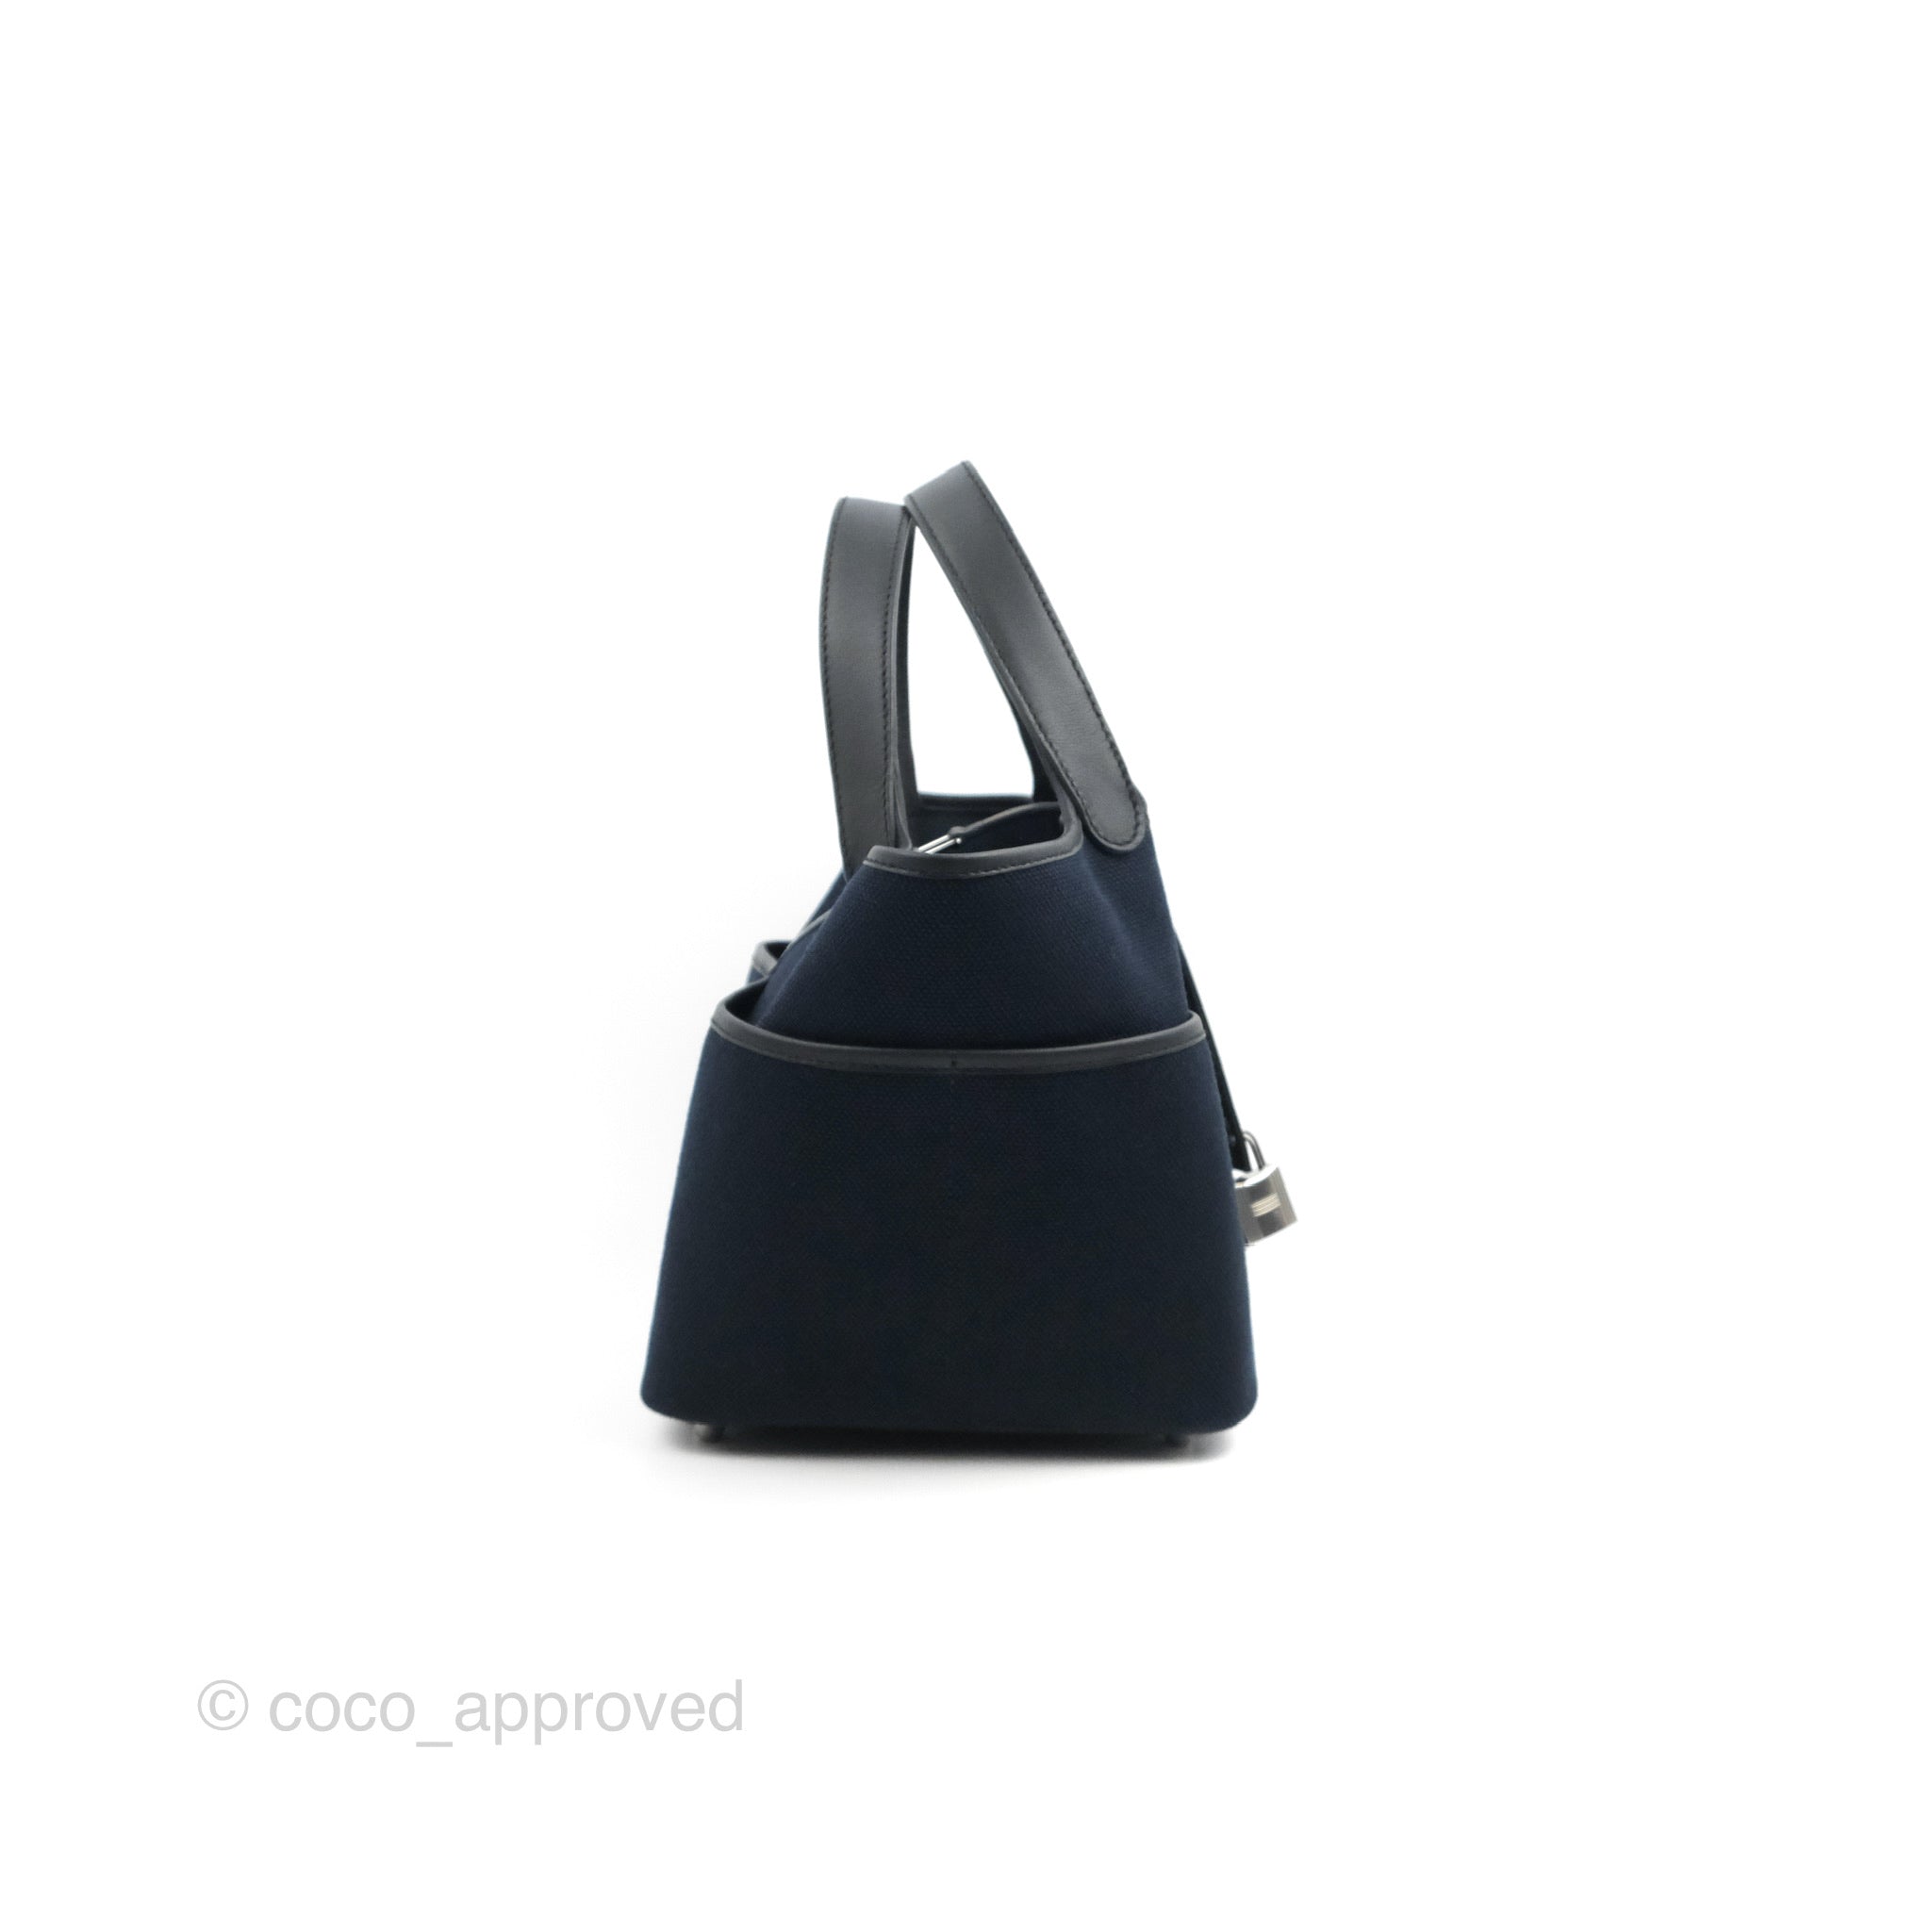 Brand New Authentic Hermes Picotin Lock 18 pocket bag, noir color, gold  hardware